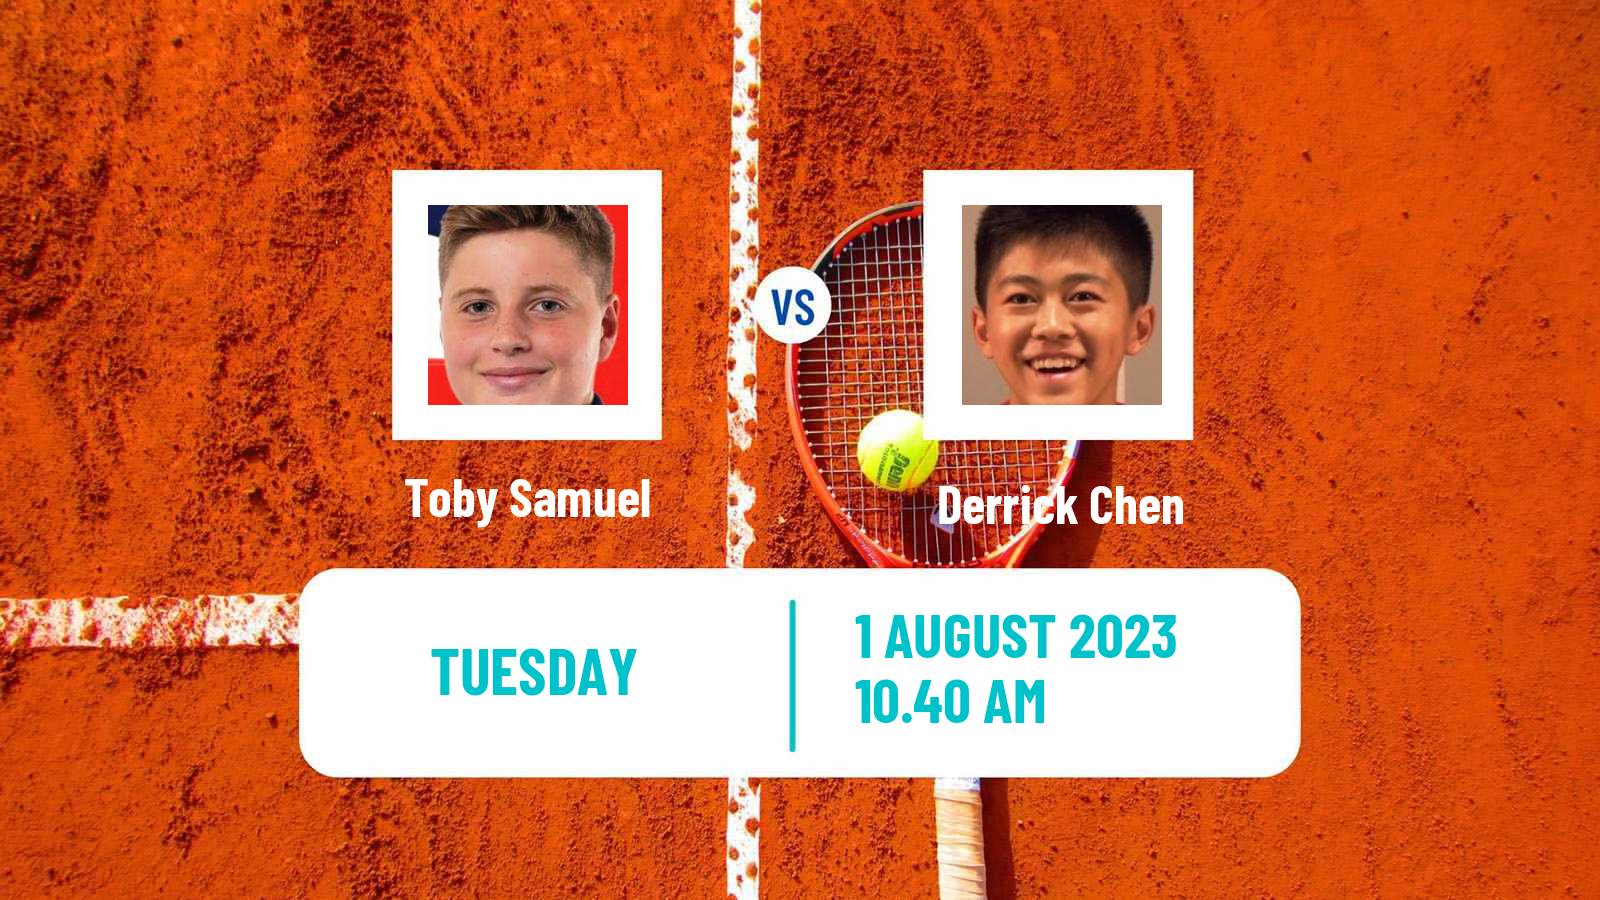 Tennis ITF M25 Roehampton 3 Men Toby Samuel - Derrick Chen